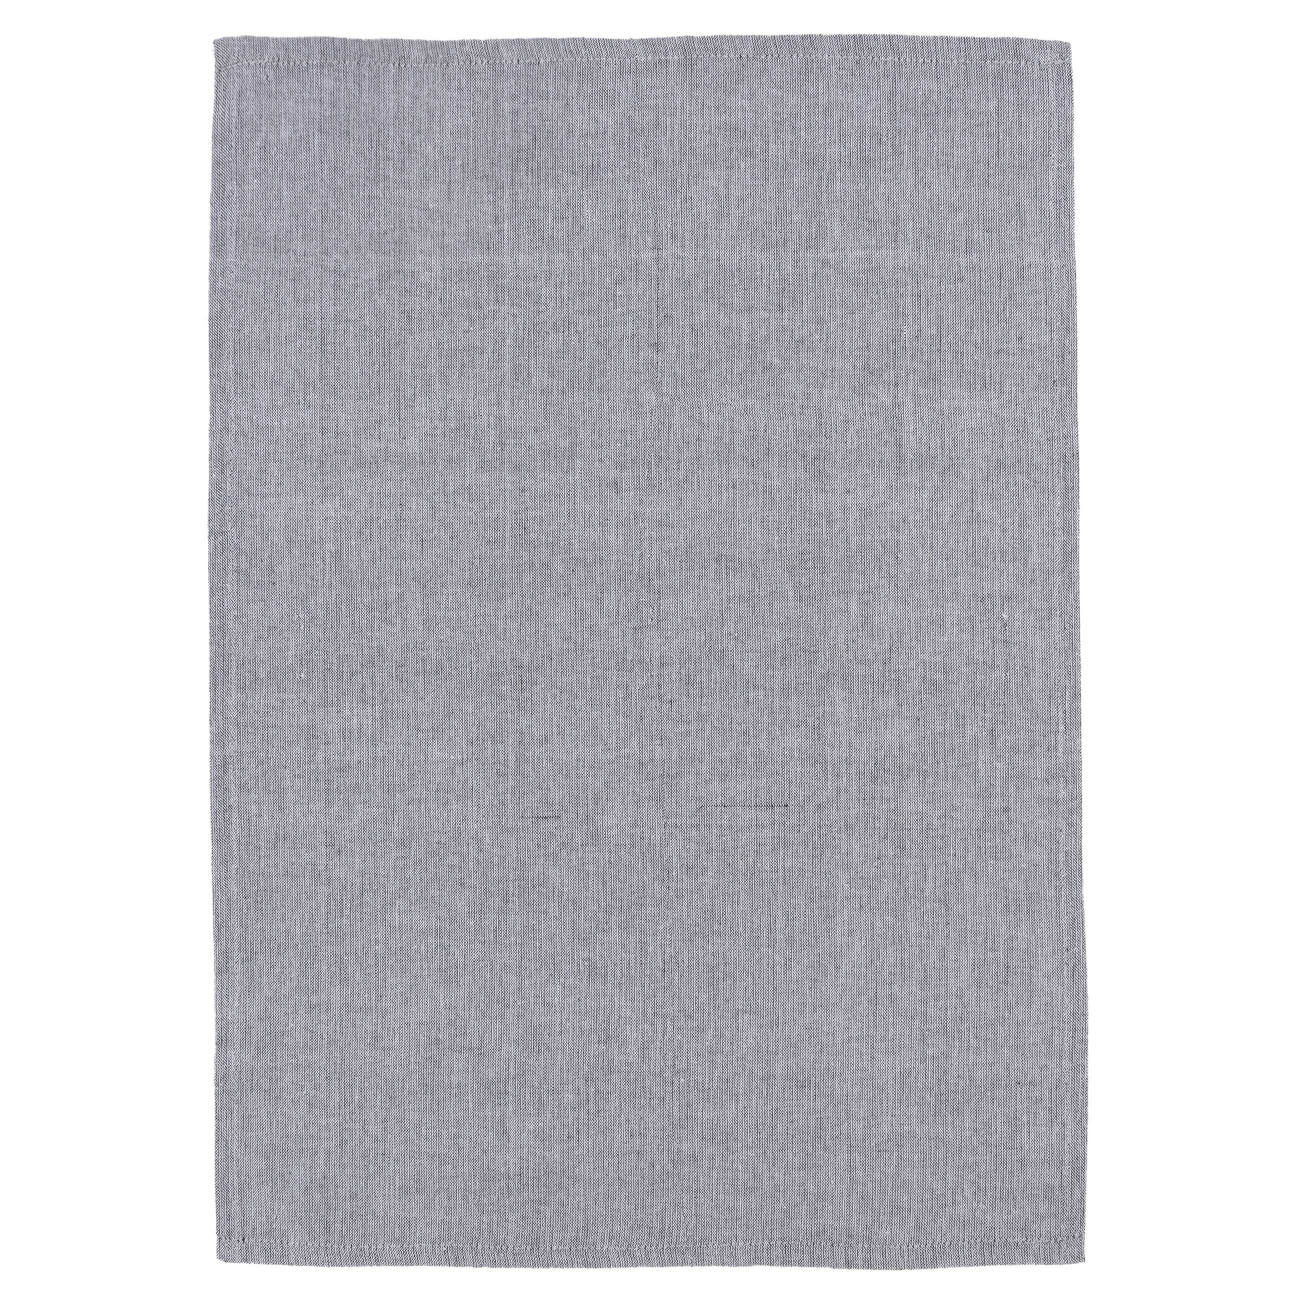 Полотенце кухонное, 40х60 см, хлопок, серый меланж, Melange grey набор для полотенце уголок рукавица